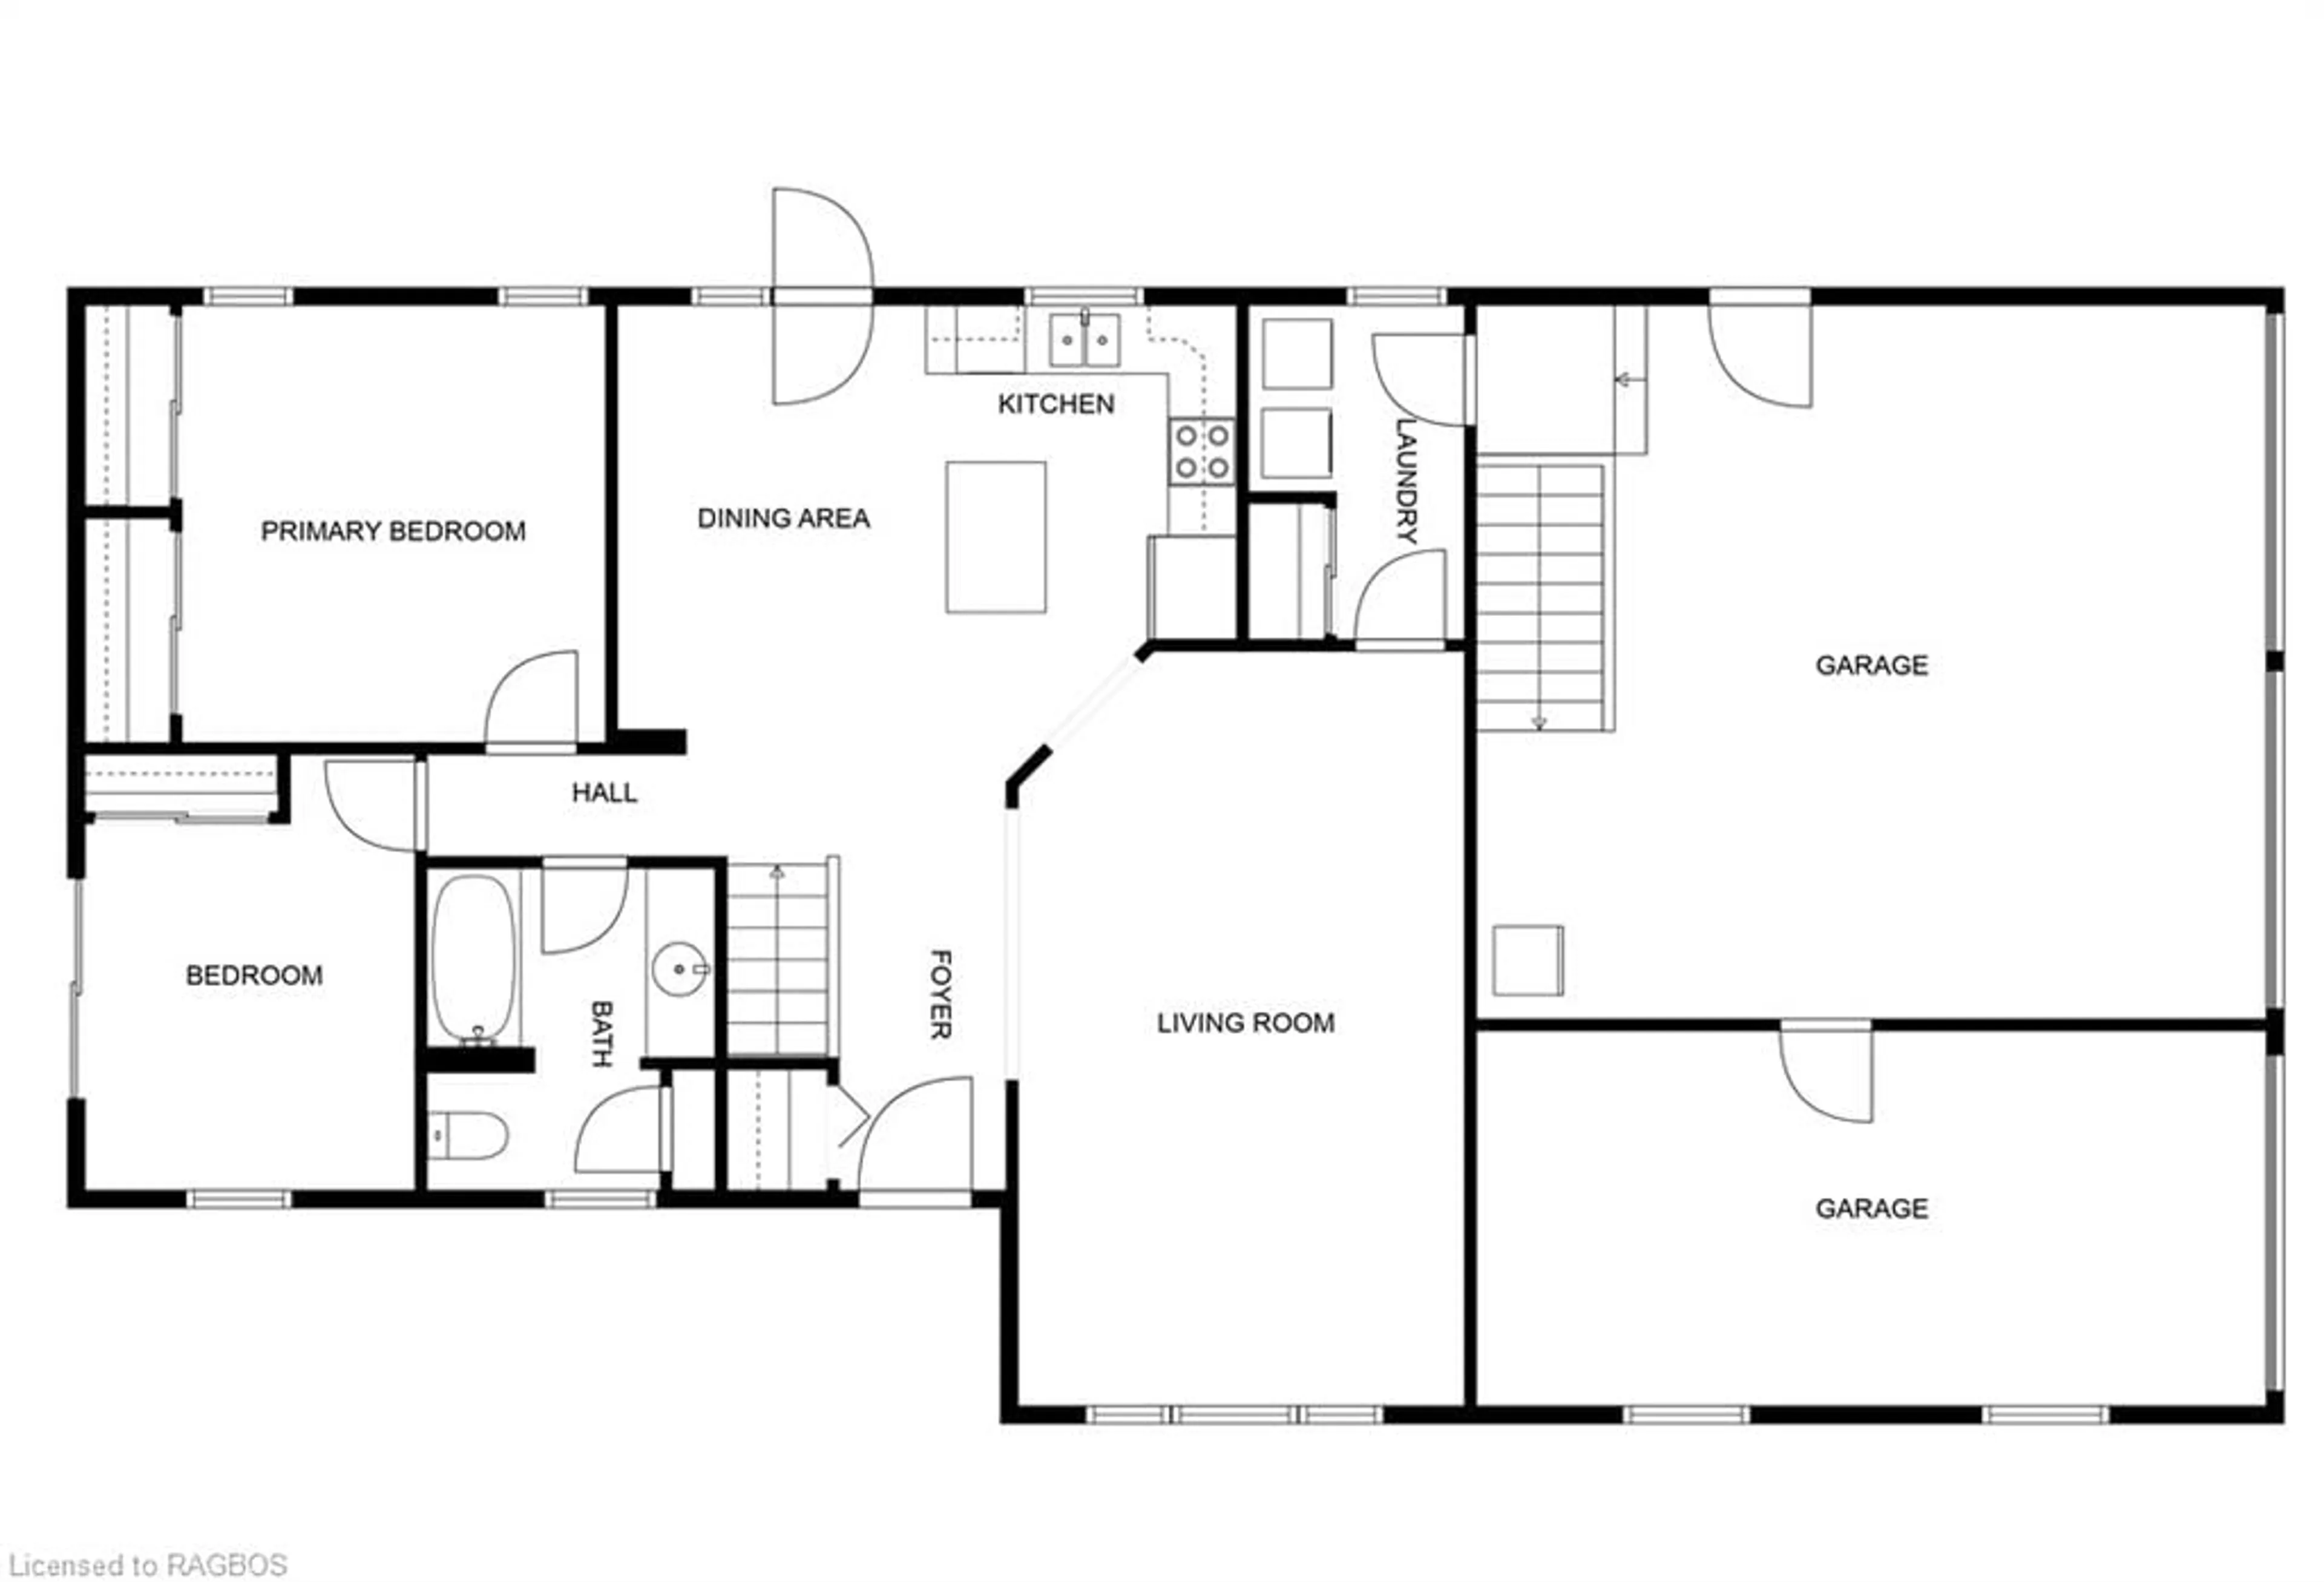 Floor plan for 625157 Sideroad 16a, Grey Highlands Ontario N0C 1H0